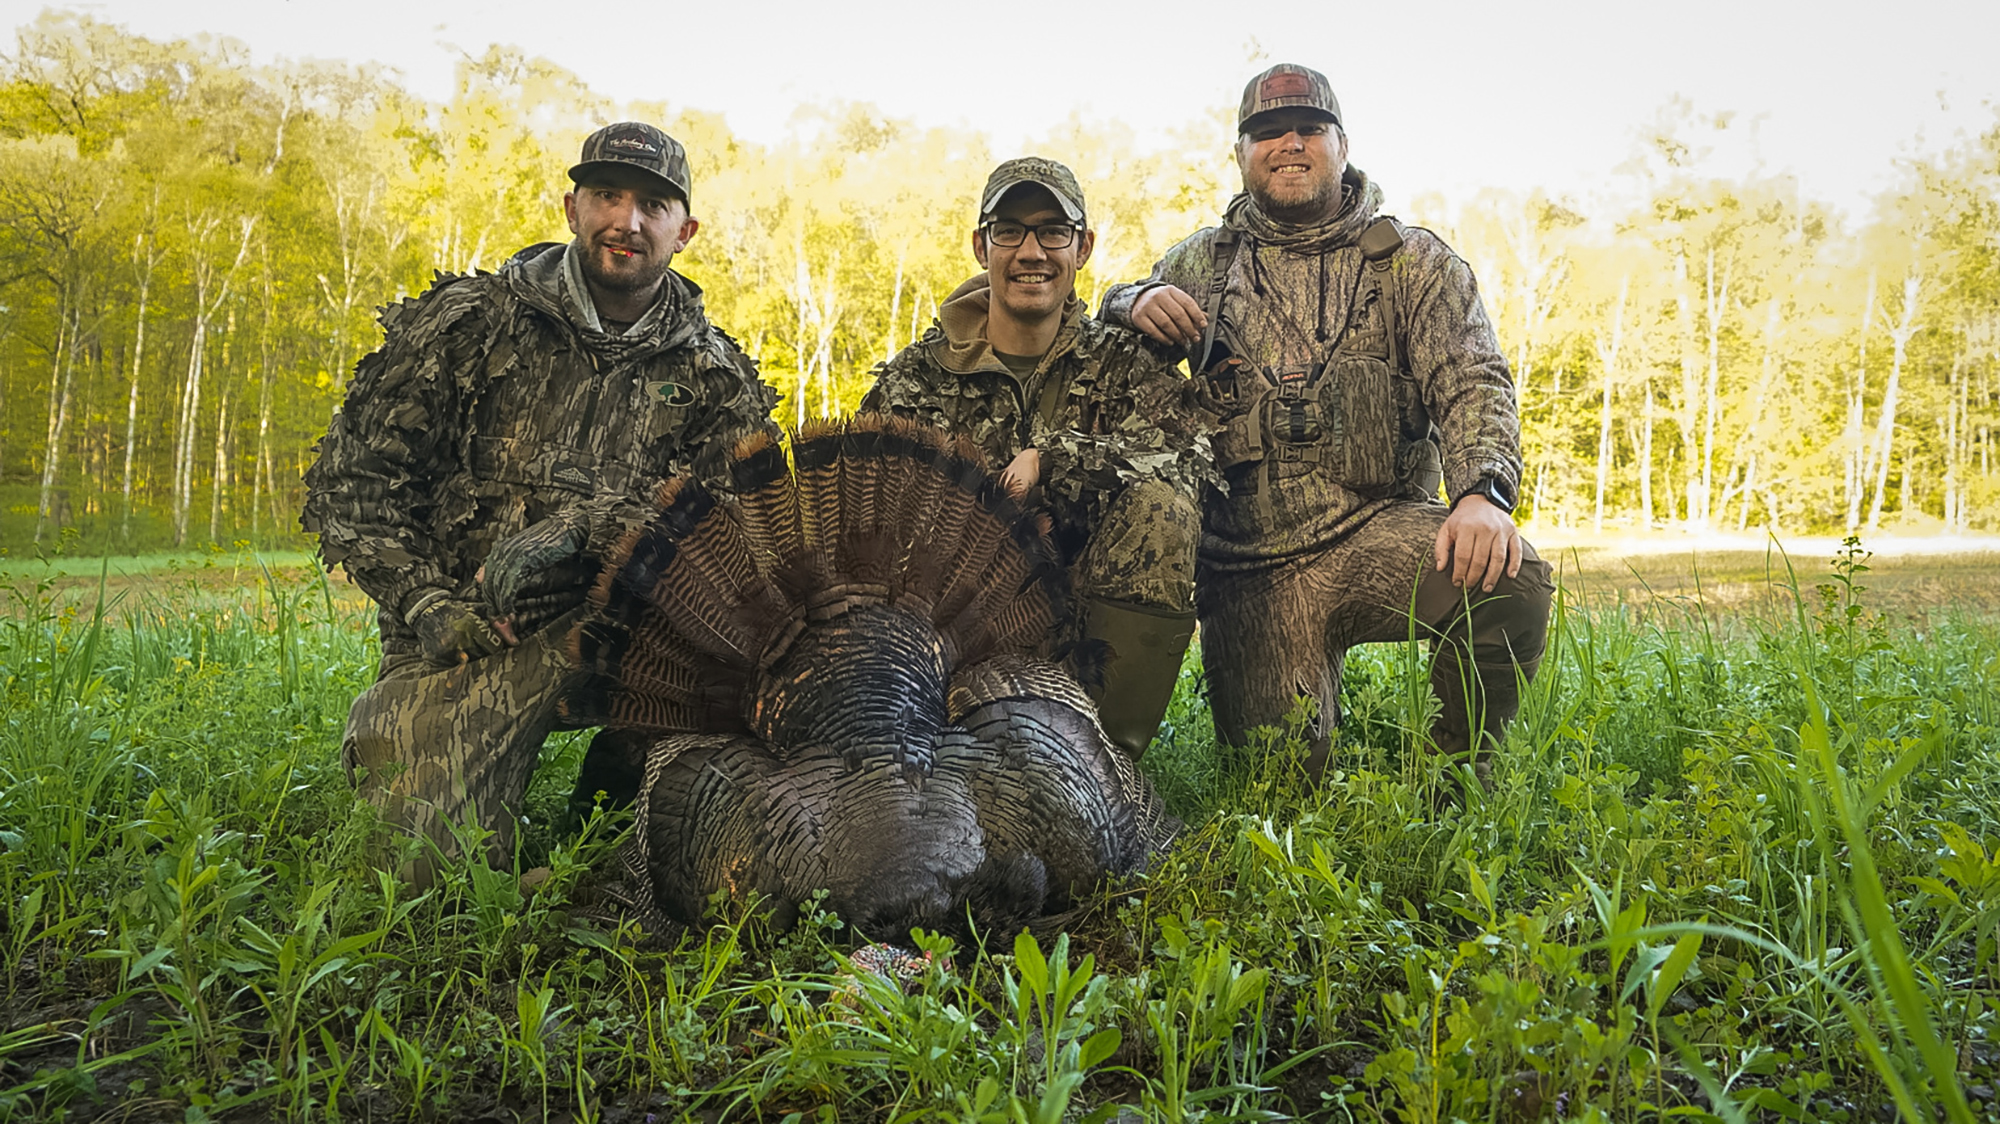 Three turkey hunters in camo